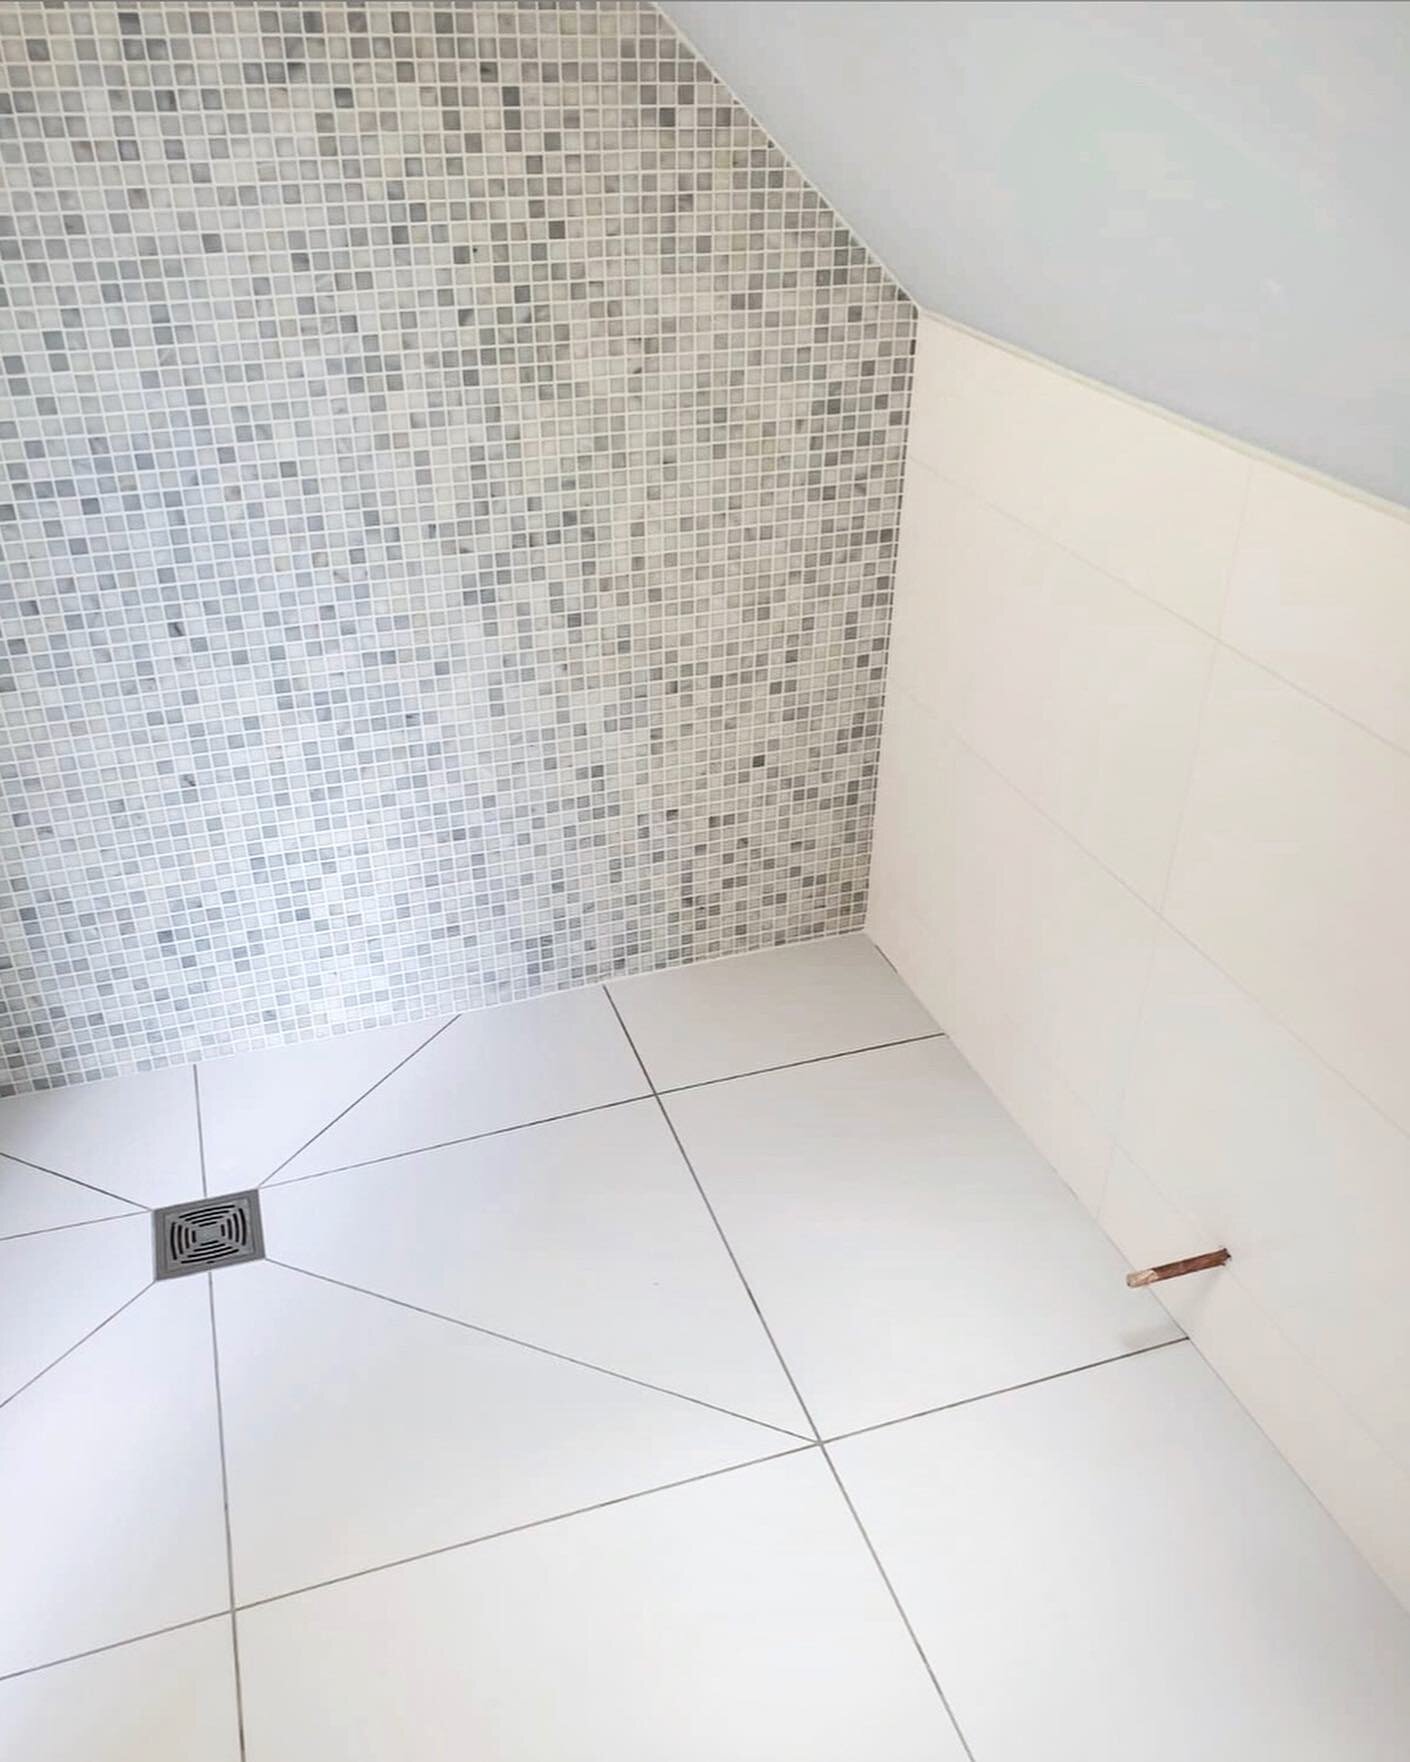 Completed mosaic bathroom, tiles supplied by @bocchettaceramica 
.
.
.
.
.
.
#tiles #tiling #tilingwork #bathroomdesign #bathroom #bathroomdecor #decor #design #woodeffect #woodeffecttiles #porcelain #shower #mosaic #wetroom #refurbished #luxury #hom